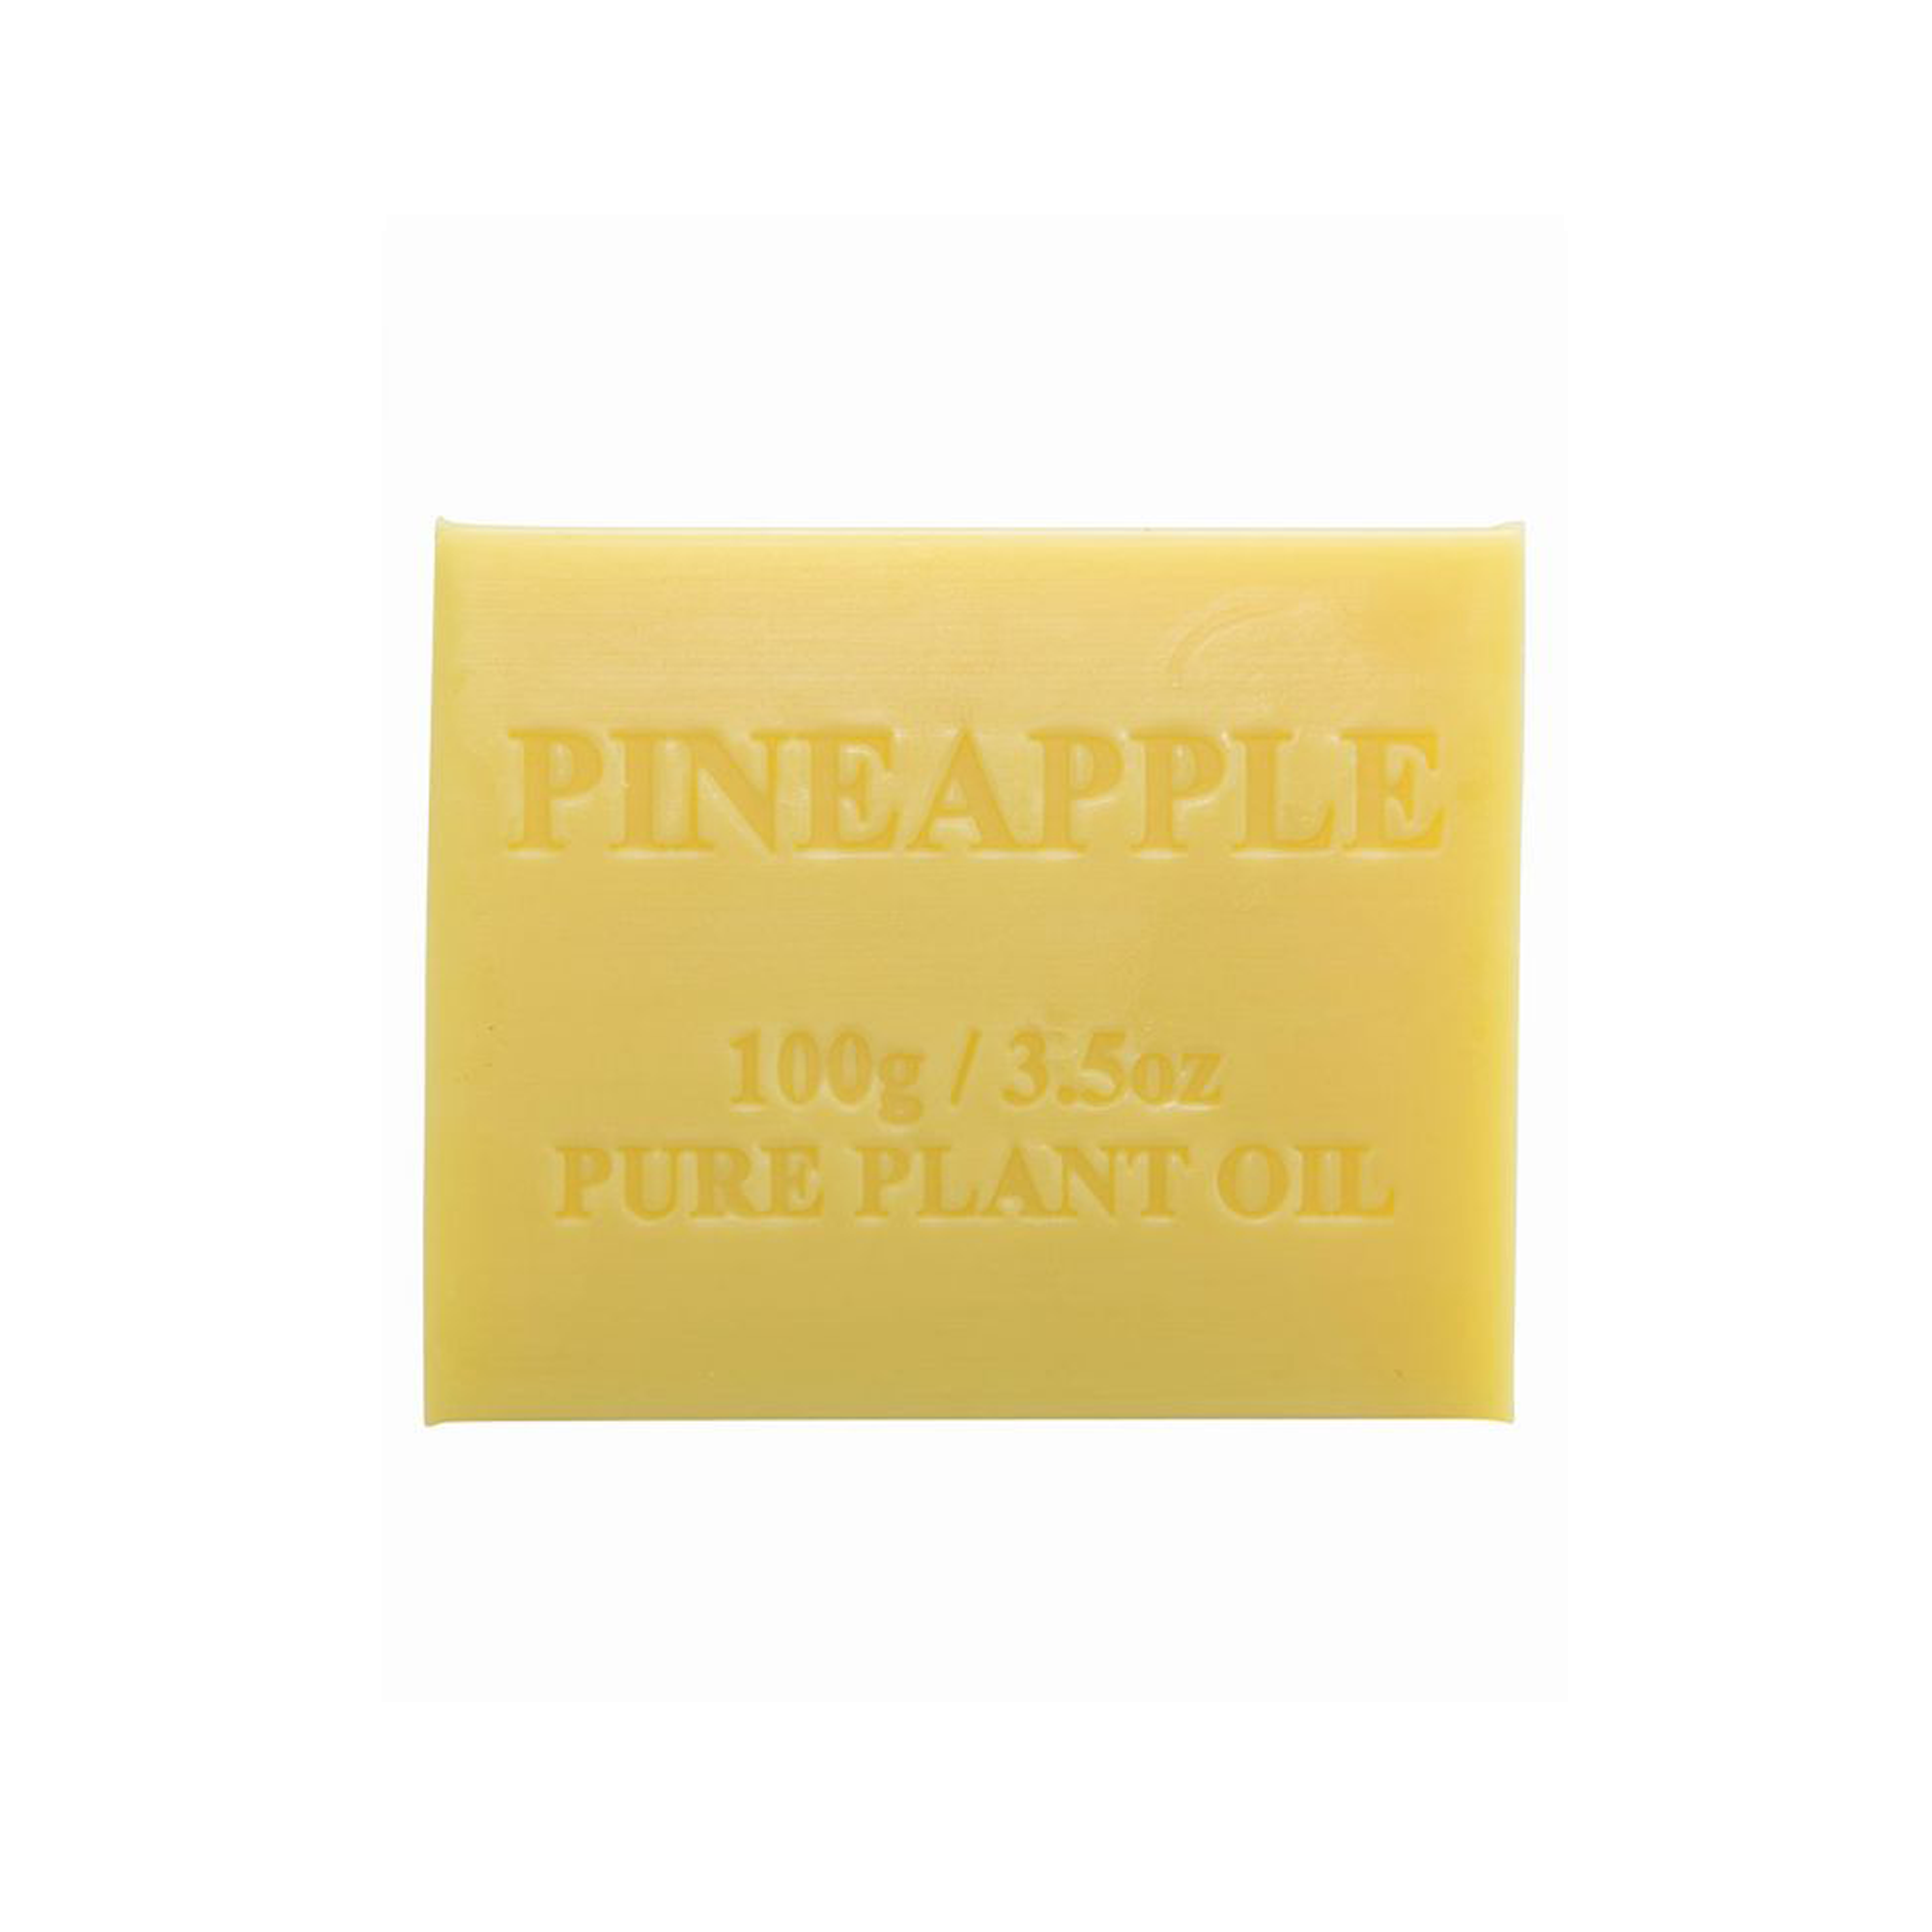 Pineapple 100g